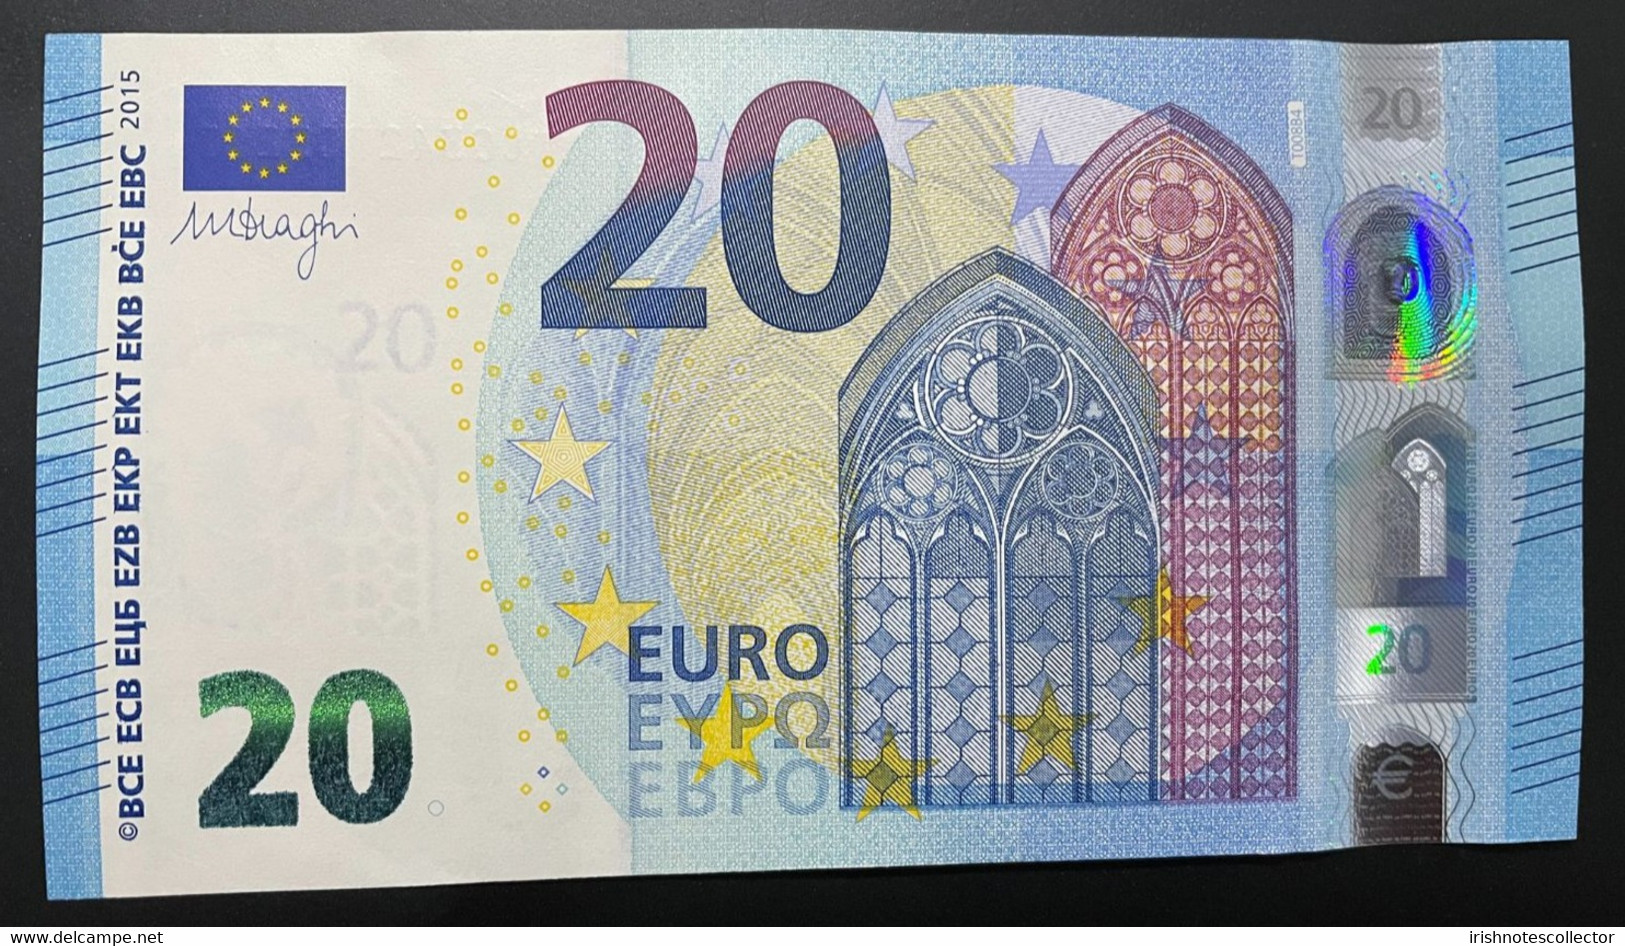 Rare Printecode T008B4 UNC € 20 Euro Draghi Ireland European Union 2015 Irlanda - 20 Euro